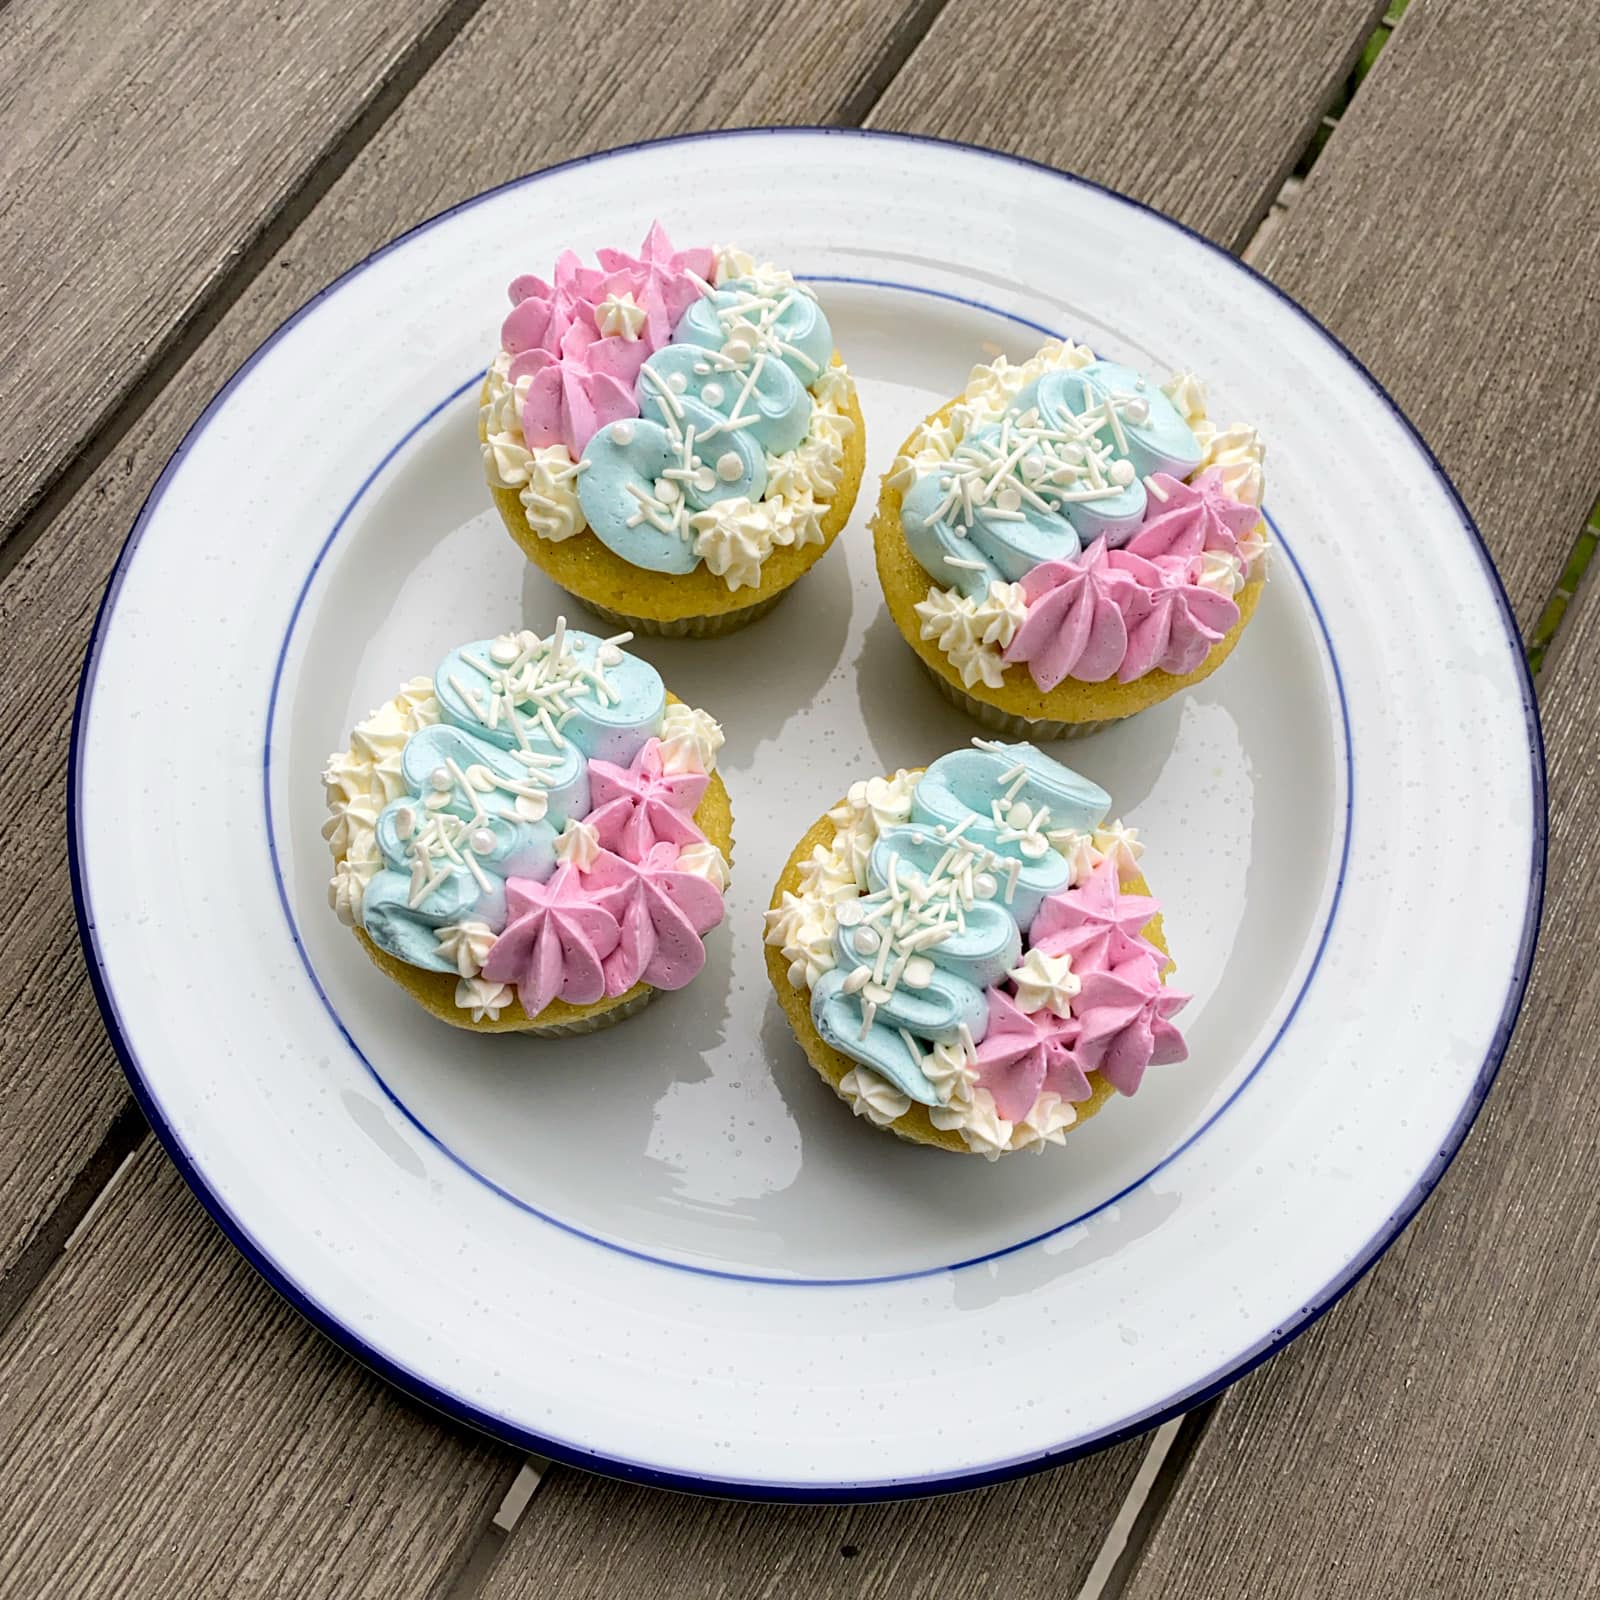 Homemade cupcakes